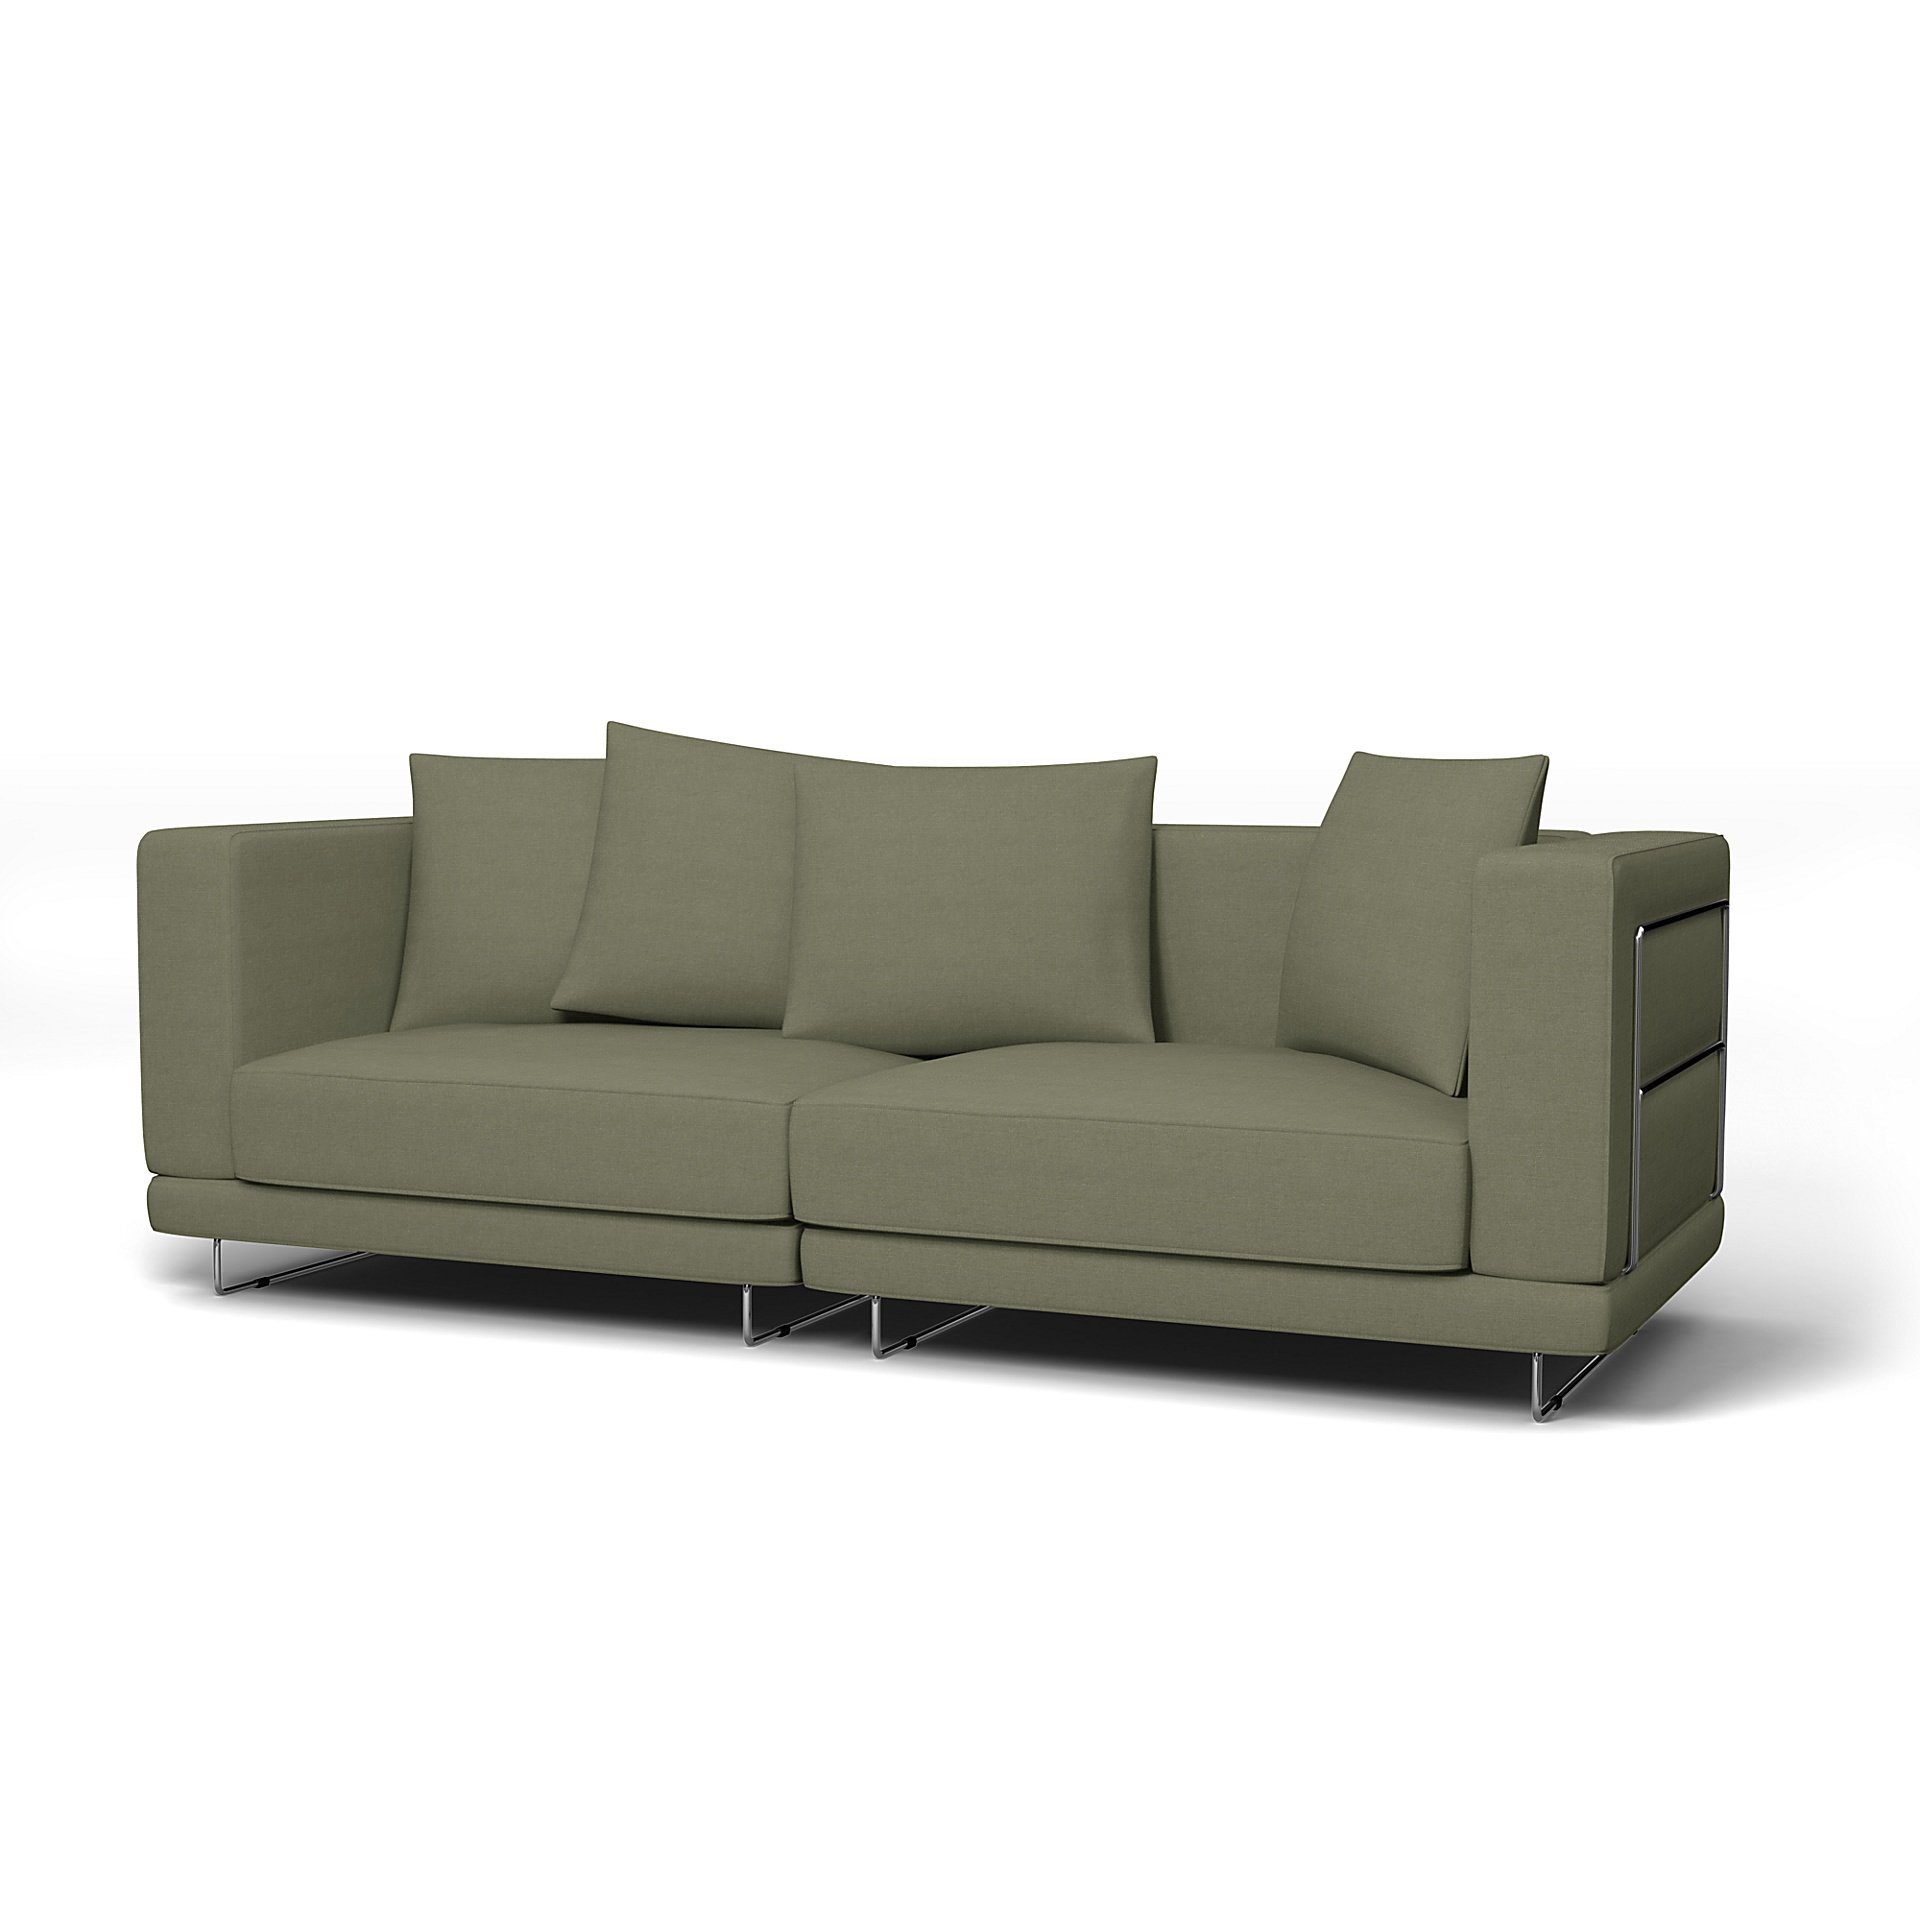 IKEA - Tylosand 3 Seater Sofa Cover, Sage, Linen - Bemz